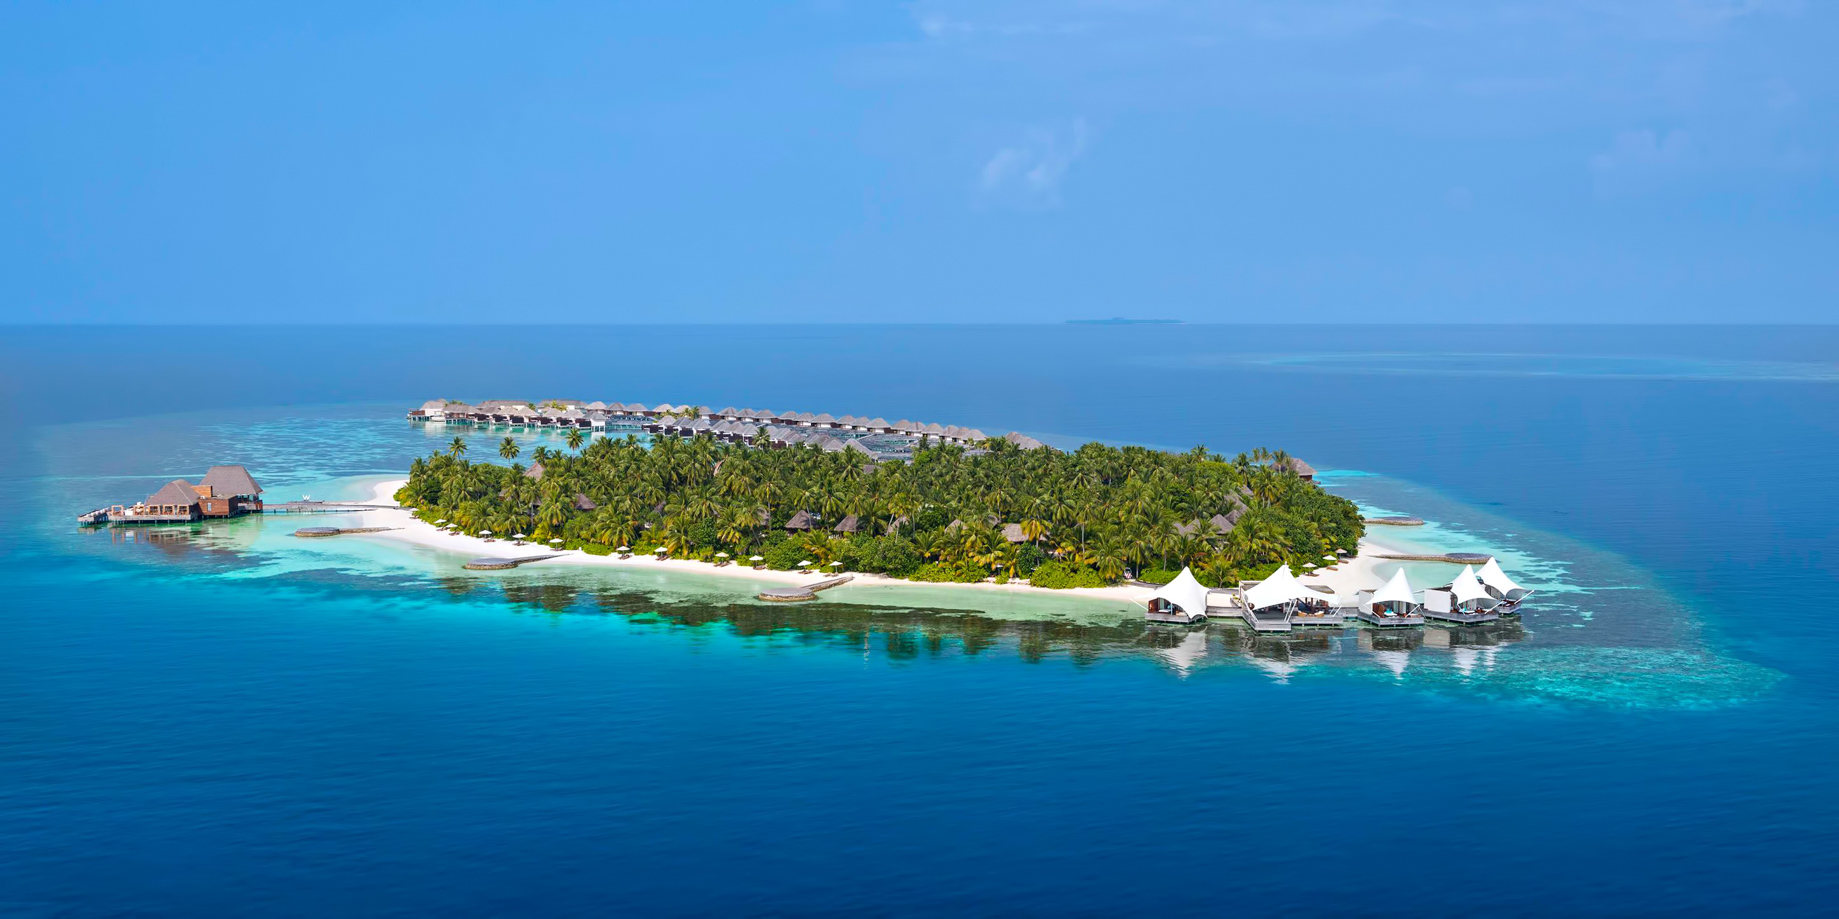 039 – W Maldives Resort – Fesdu Island, Maldives – Private Island Resort Aerial View